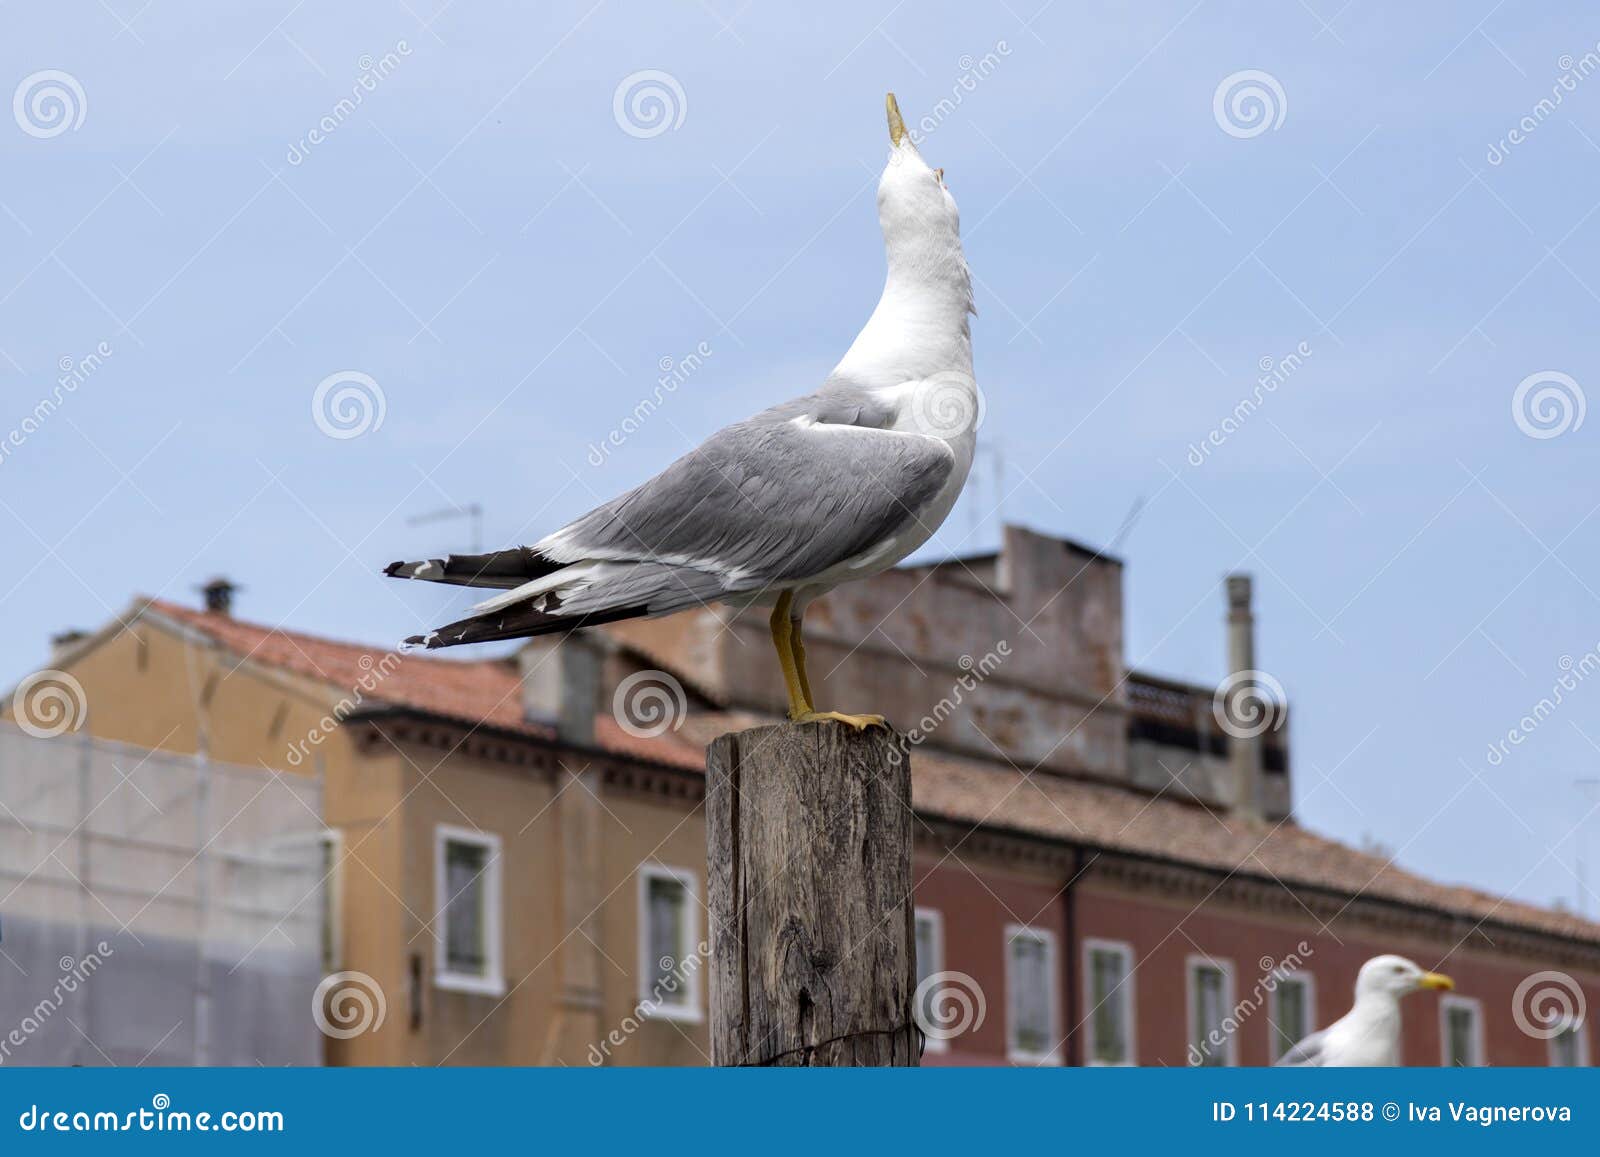 larus michahellis, yellow-legged gulls on bricole in italian town chioggia